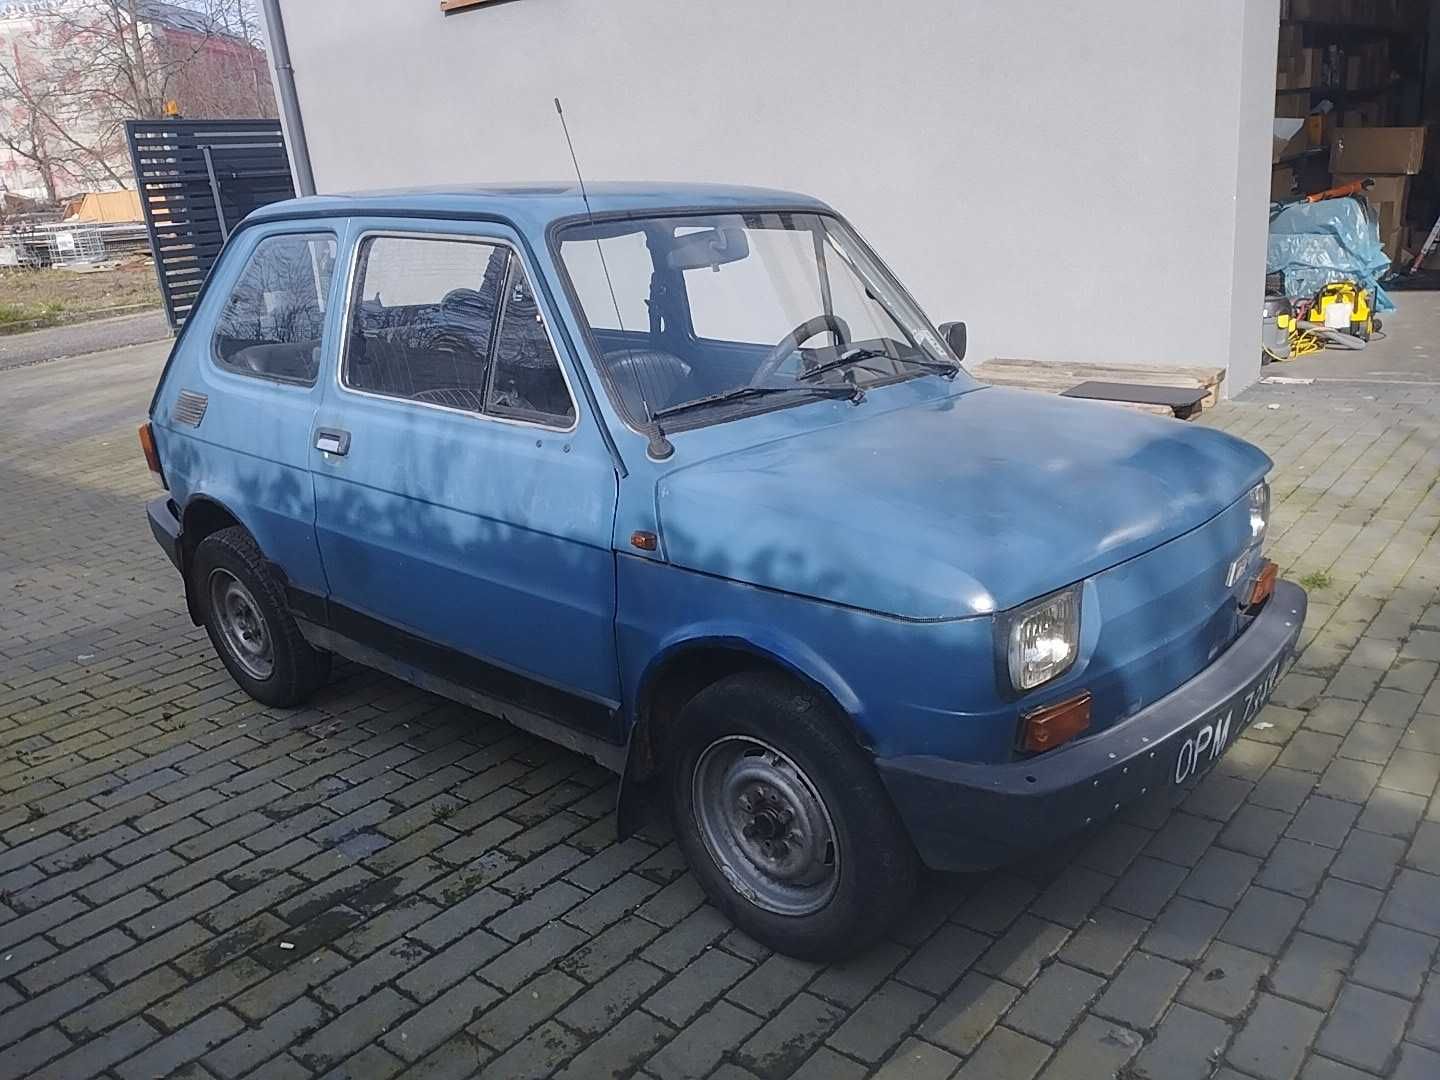 Fiat 126p maluch 126